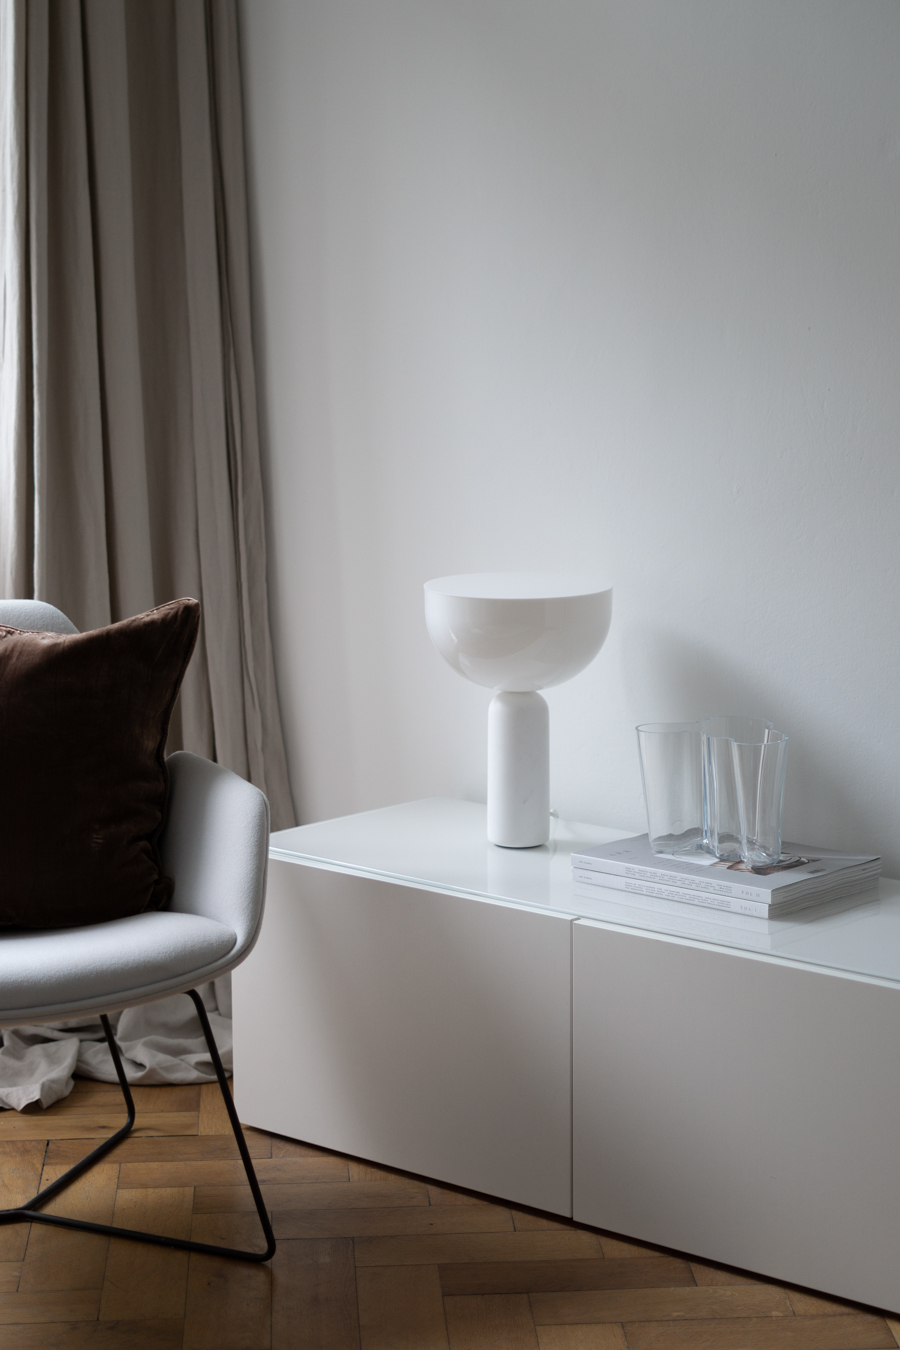 New Works Kizu Lamp, Aalto Savoy Vase, Neutral Interior Aesthetic, Danish Design